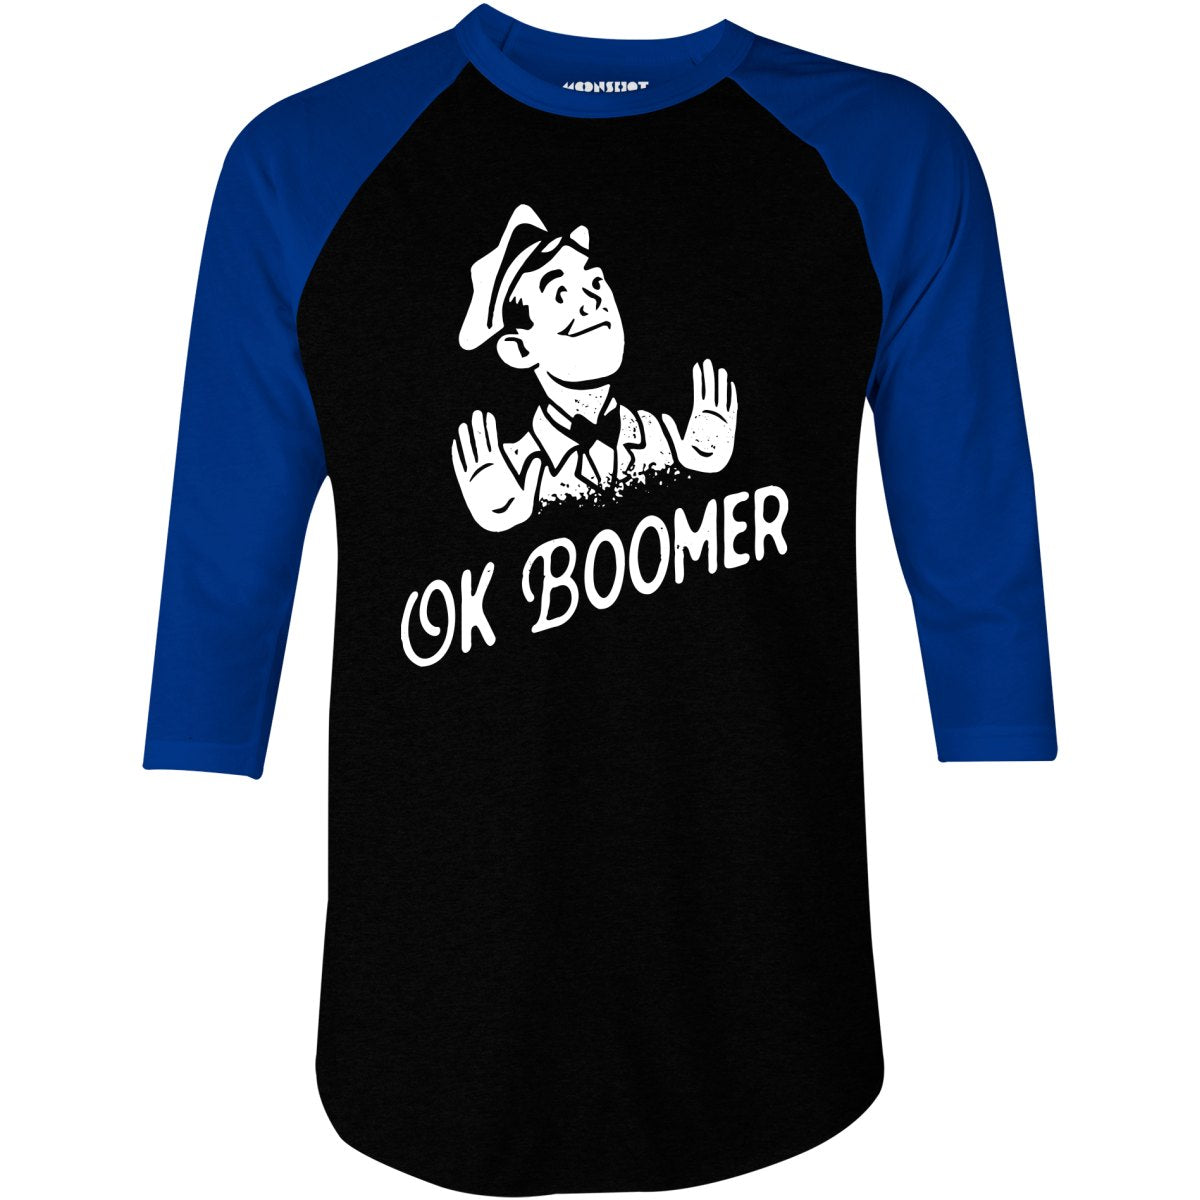 Ok Boomer - 3/4 Sleeve Raglan T-Shirt